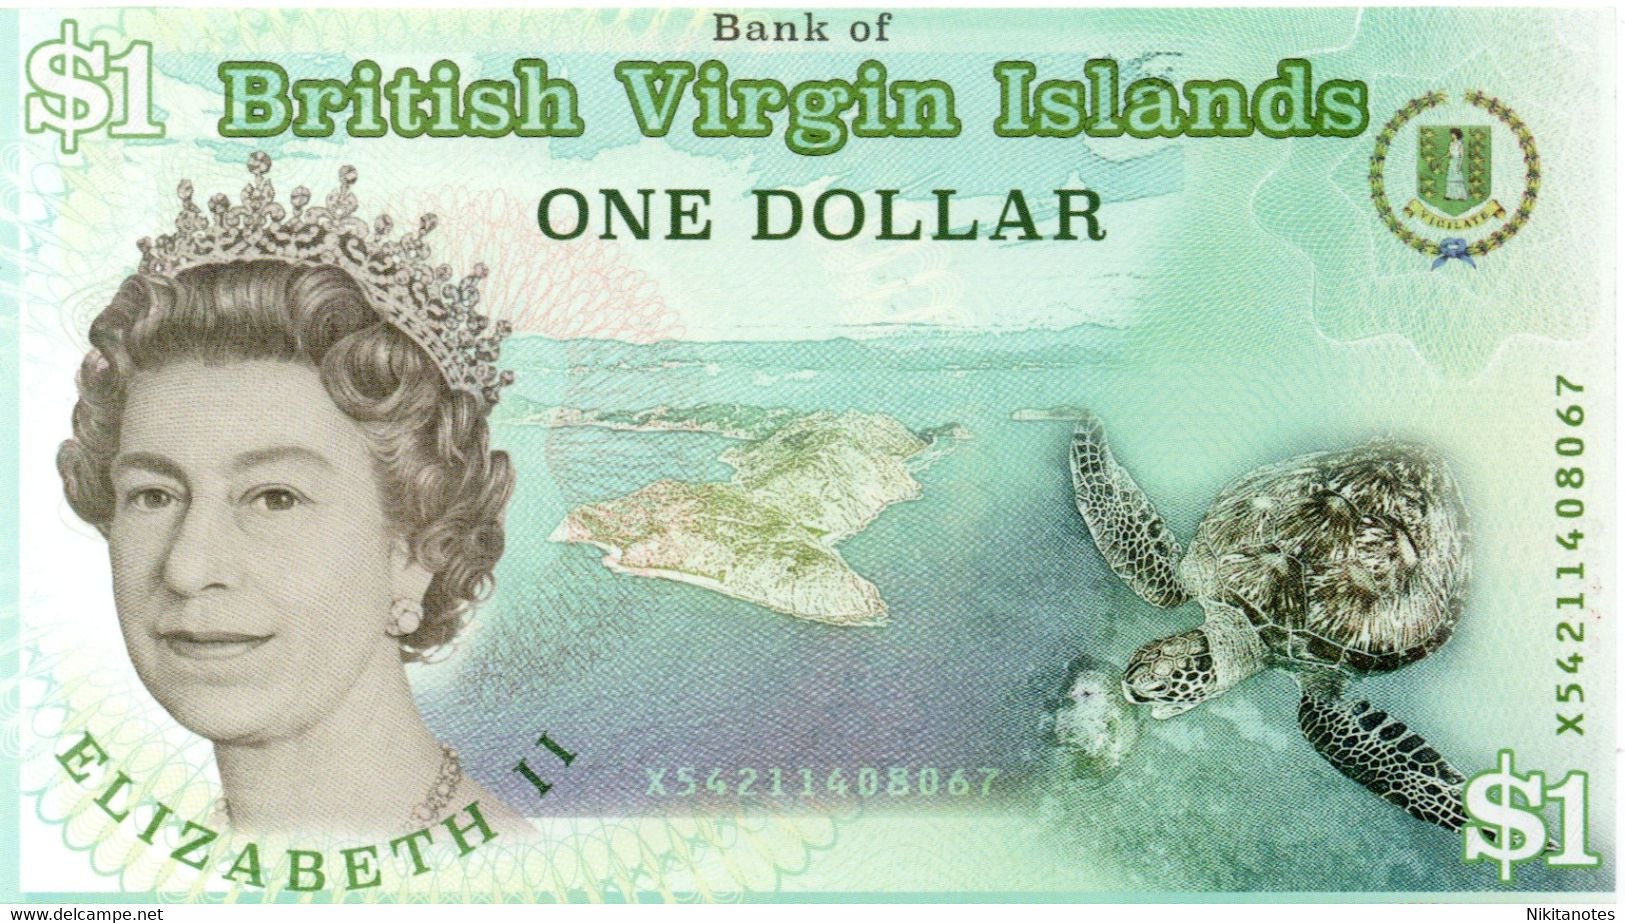 BRITISH VIRGIN ISLANDS 1 Dollar Ayrton Senna Banknote Polymer Unc 2014 - Autres - Océanie